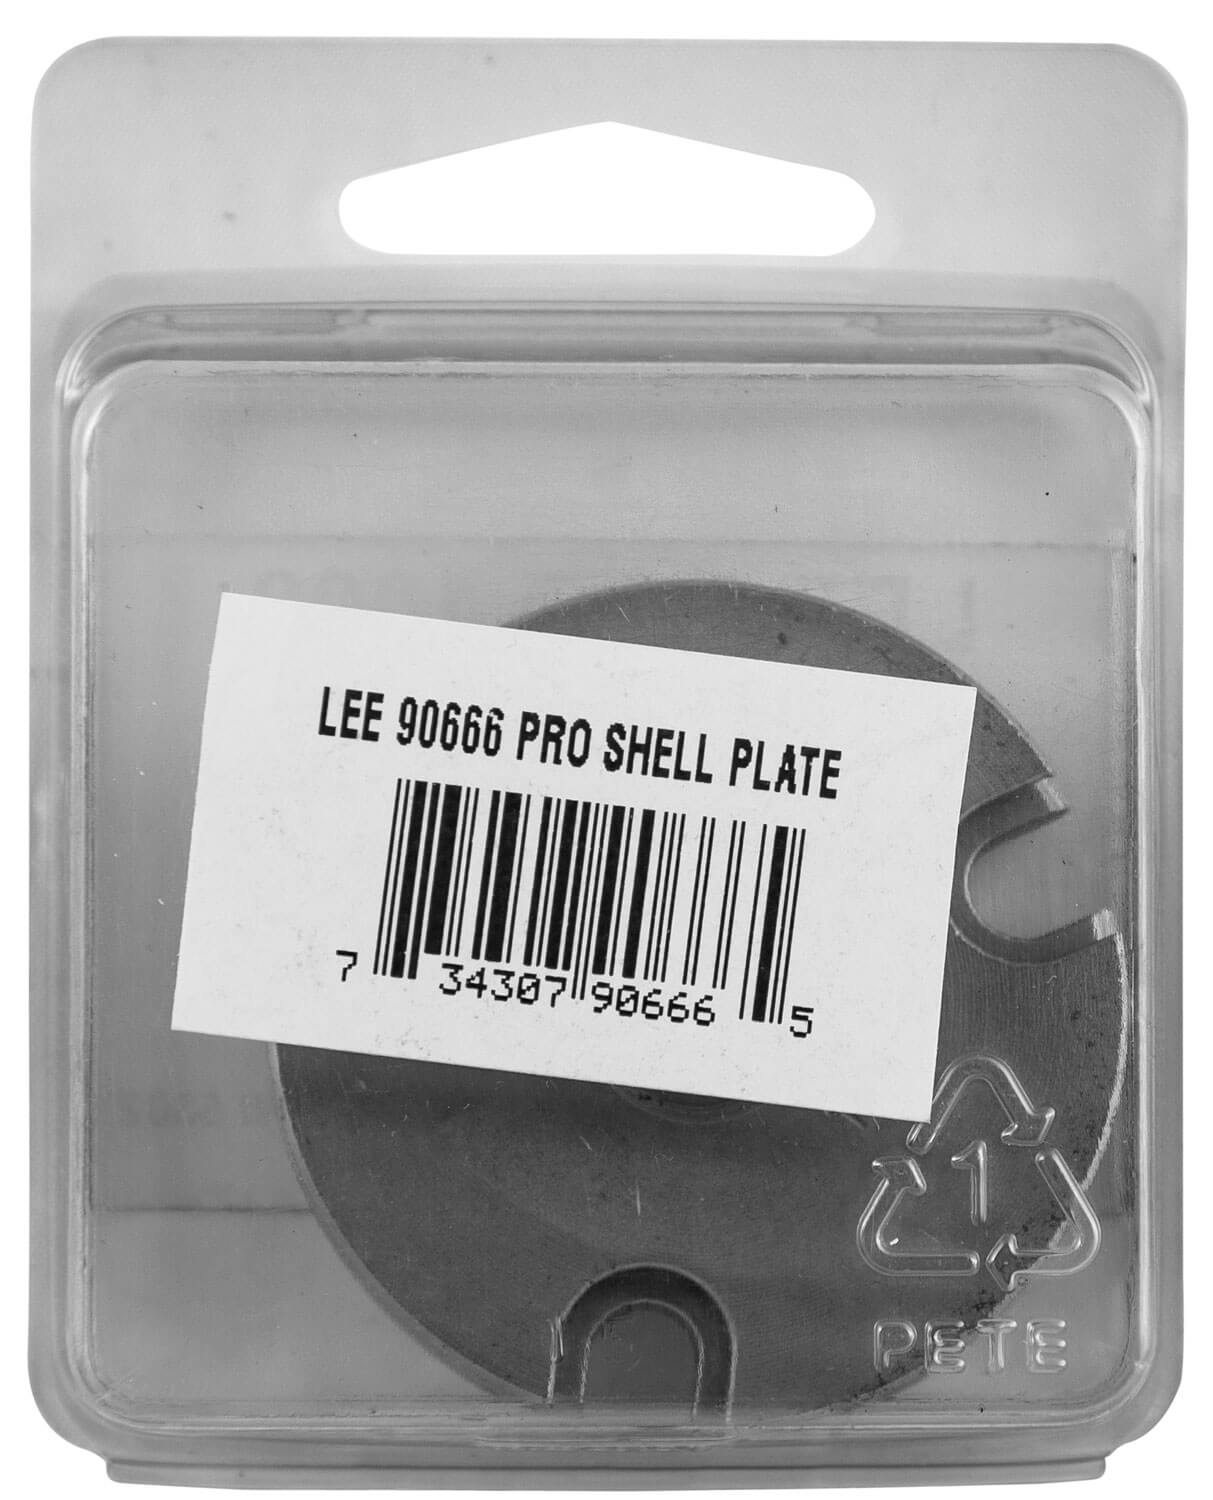 7.62 x 39mm 6mm PPC 90666 Lee Pro 1000 Press New Model Shell Plate #12 22 PPC 